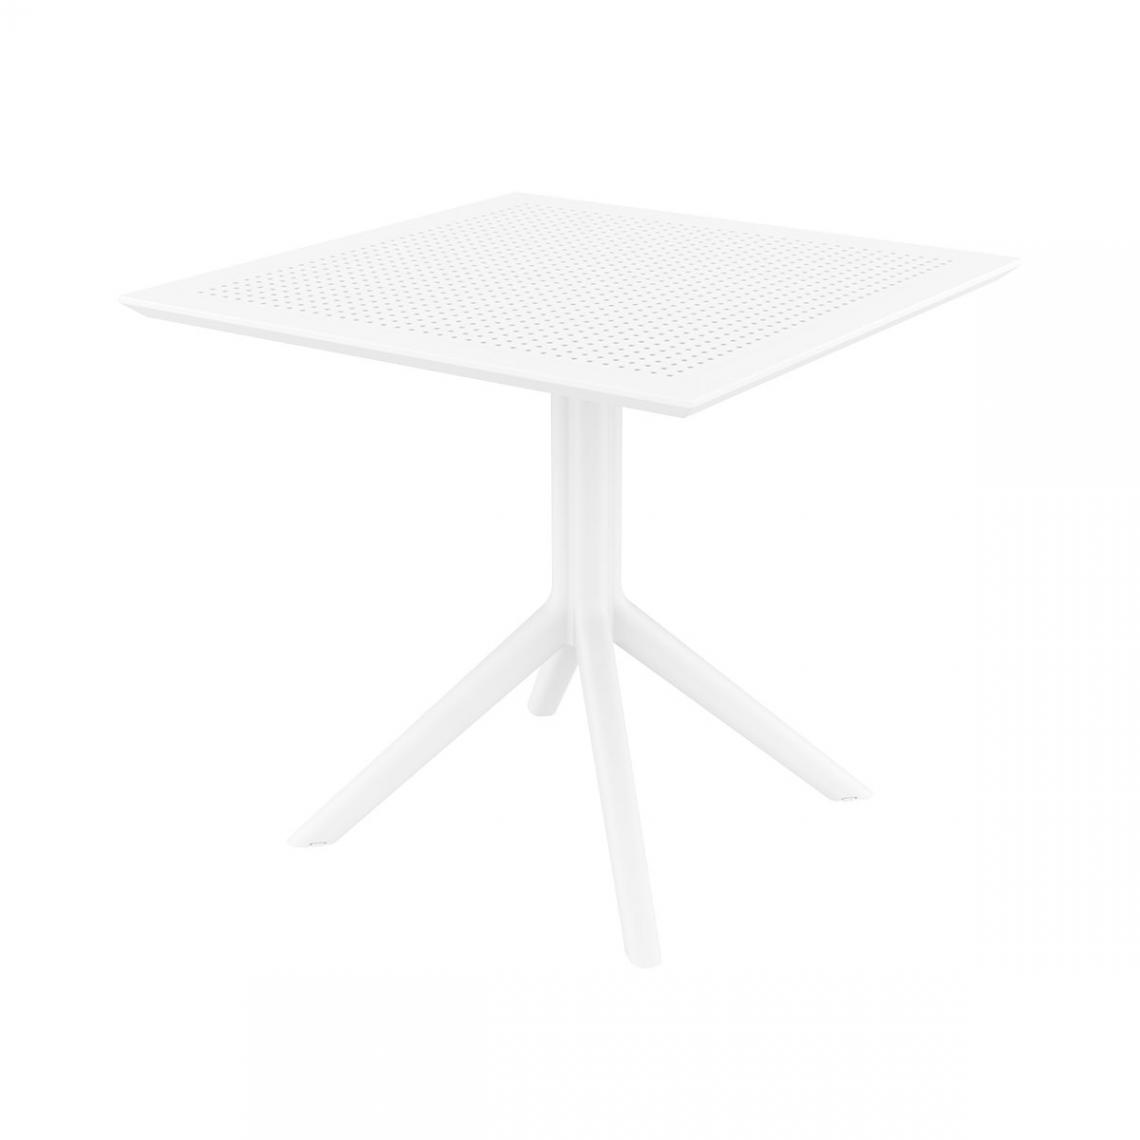 Cemonjardin - Table SKY blanc en polypropylène renforcé - Siesta - Tables de jardin